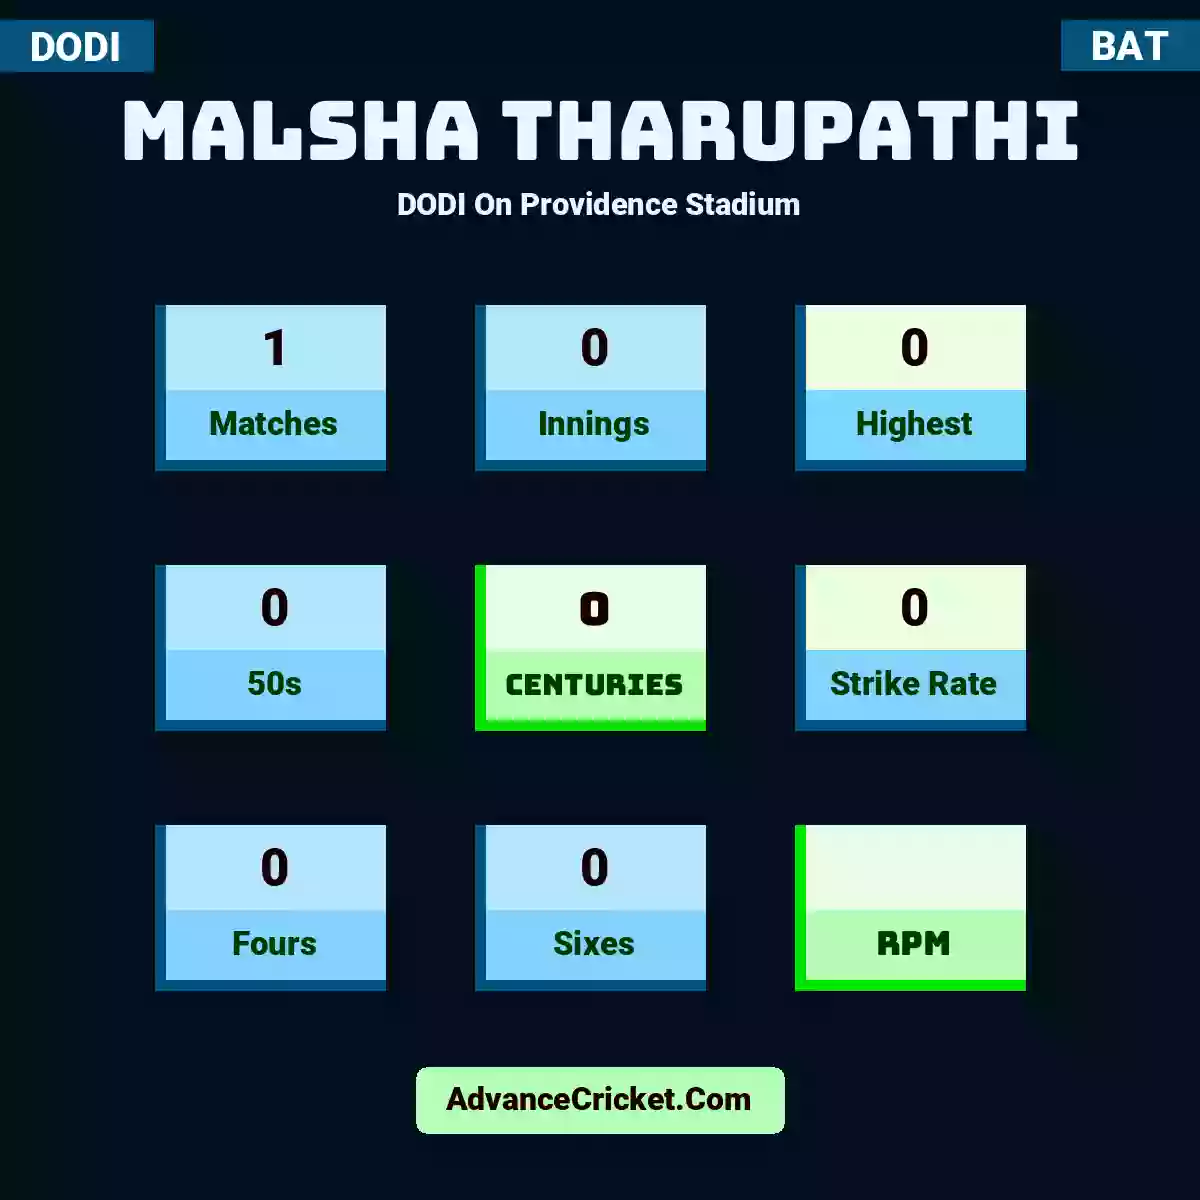 Malsha Tharupathi DODI  On Providence Stadium, Malsha Tharupathi played 1 matches, scored 0 runs as highest, 0 half-centuries, and 0 centuries, with a strike rate of 0. M.Tharupathi hit 0 fours and 0 sixes.